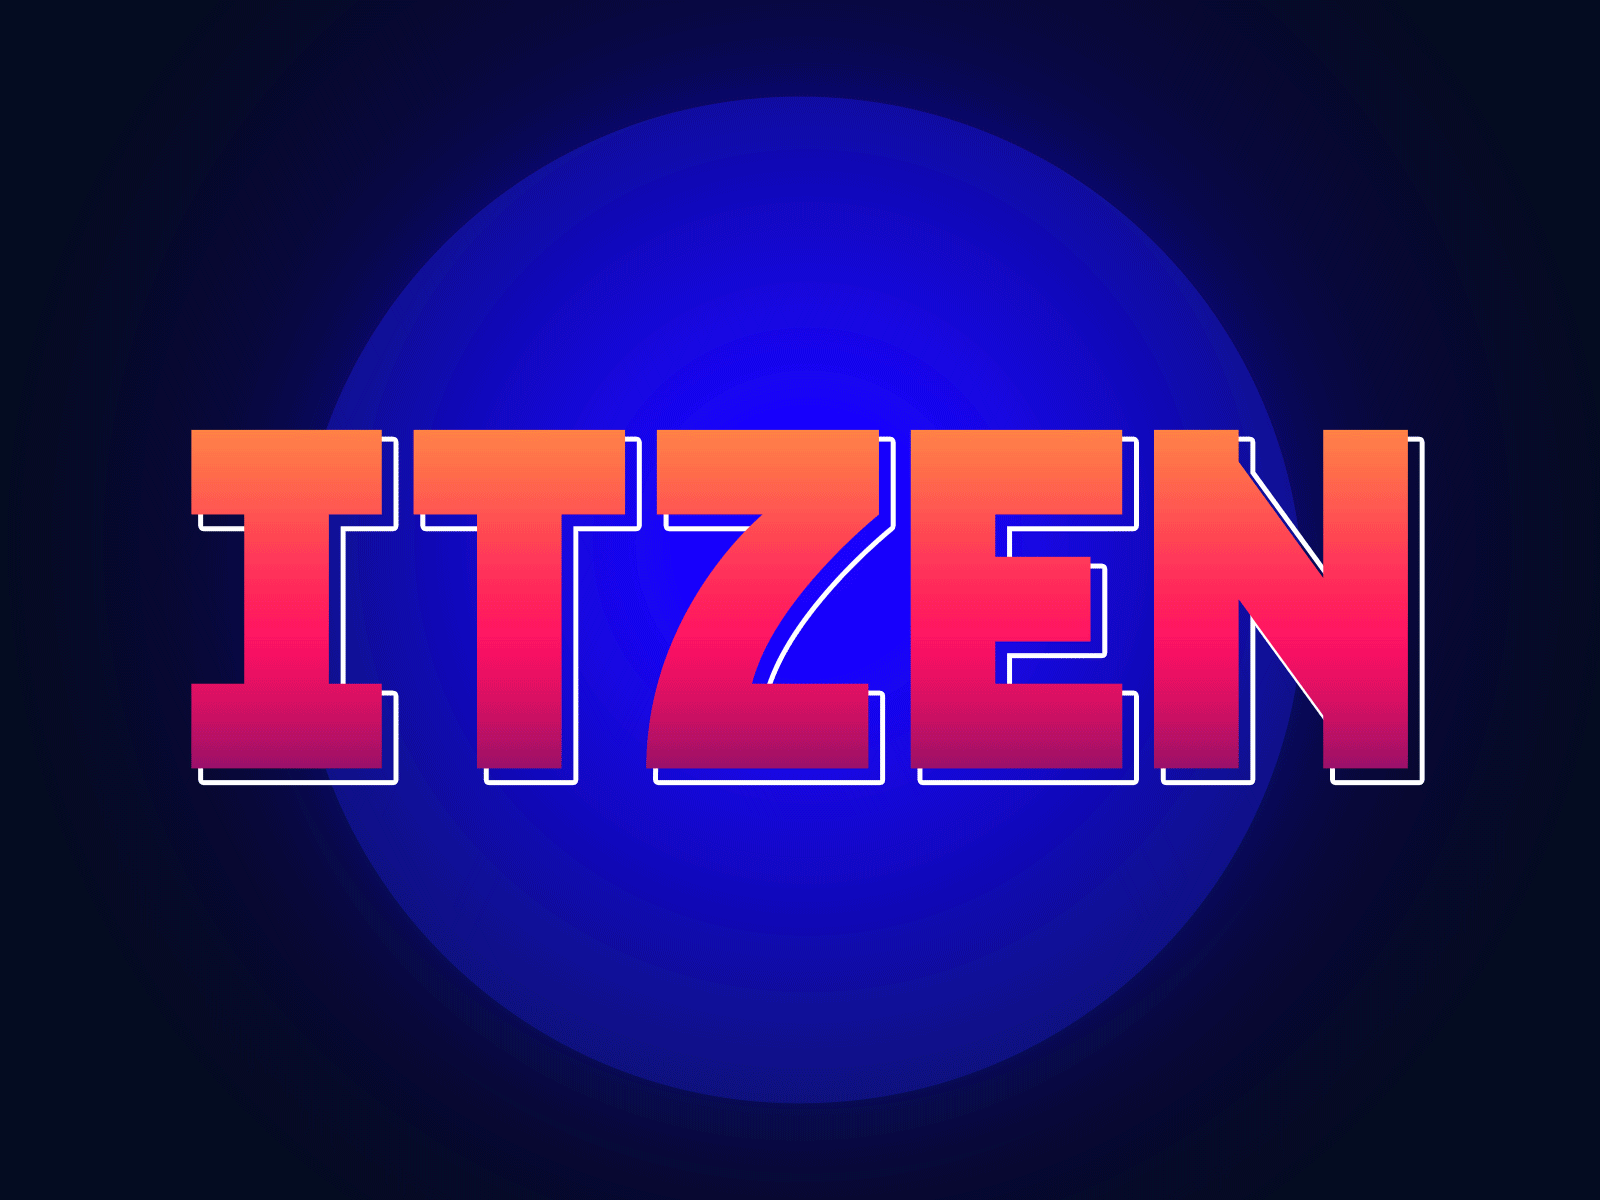 Itzen - Starting it simple